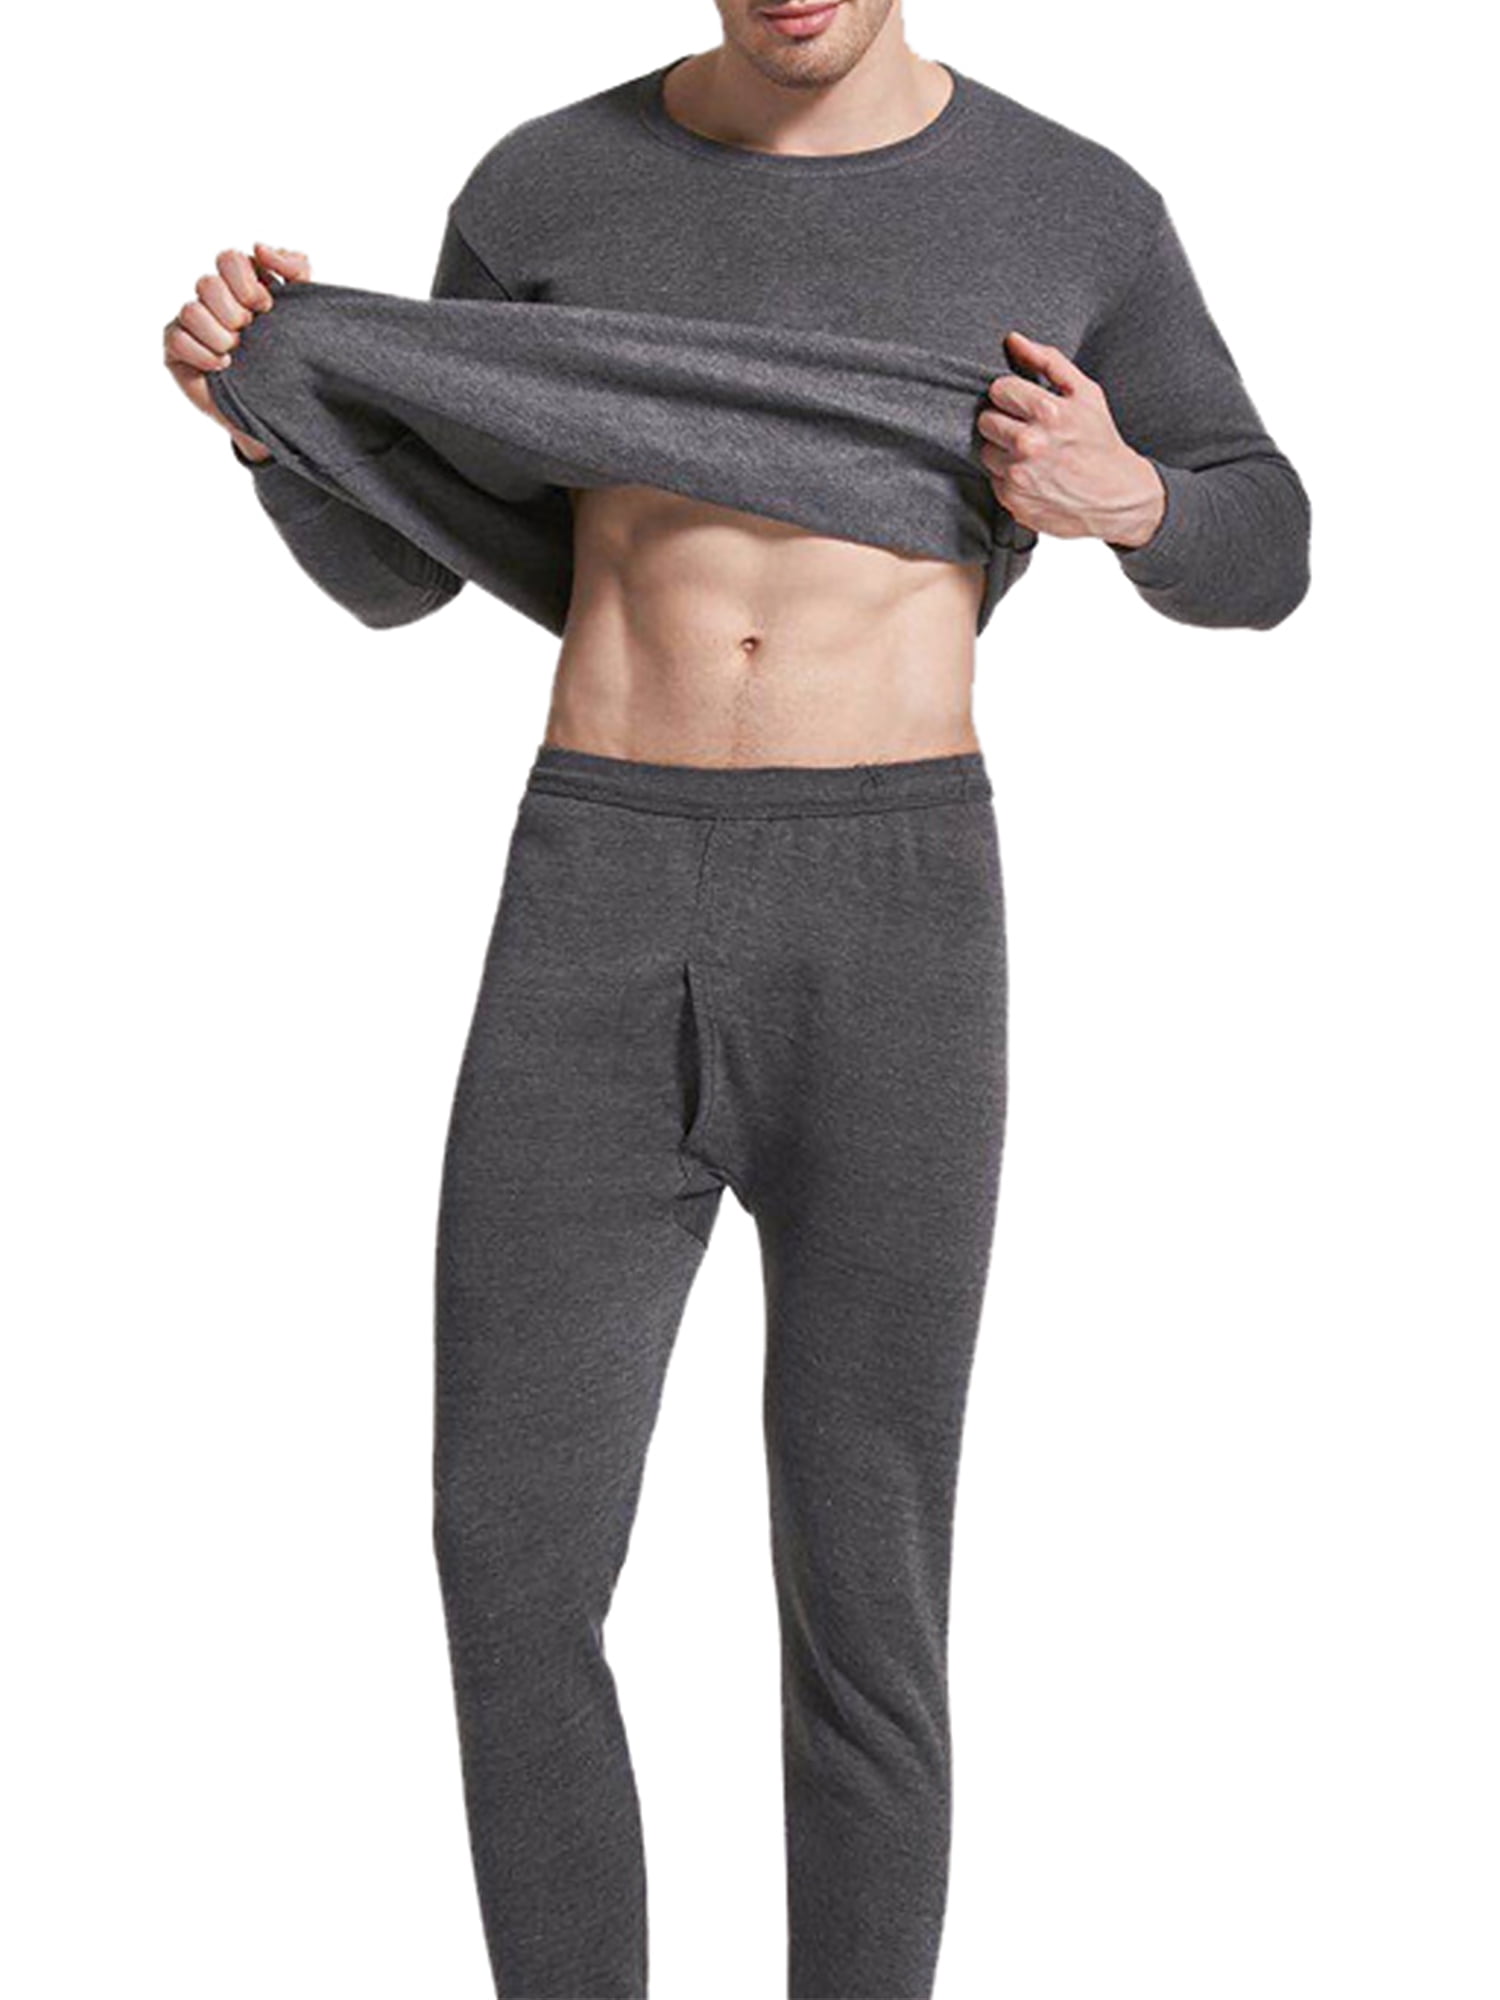 Thermals Men's Wool Mix Knit Base Layer Underwear Long Johns Grey Large 